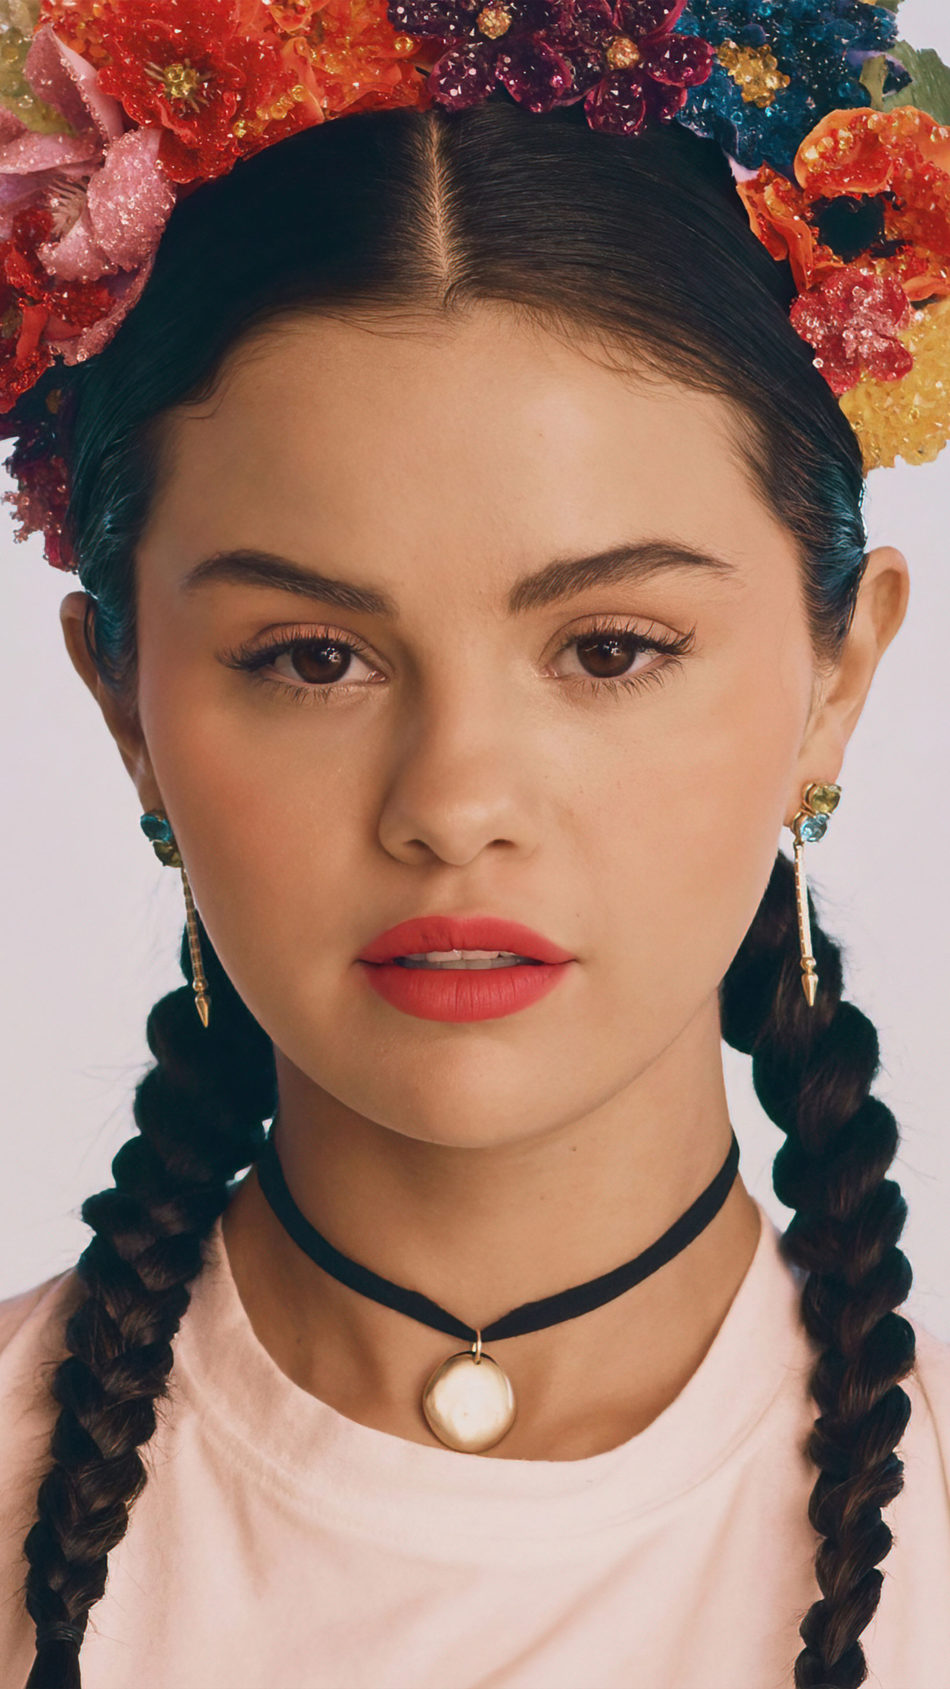 Selena Gomez 2020 Indian Style Photoshoot 4K Ultra HD Mobile Wallpaper